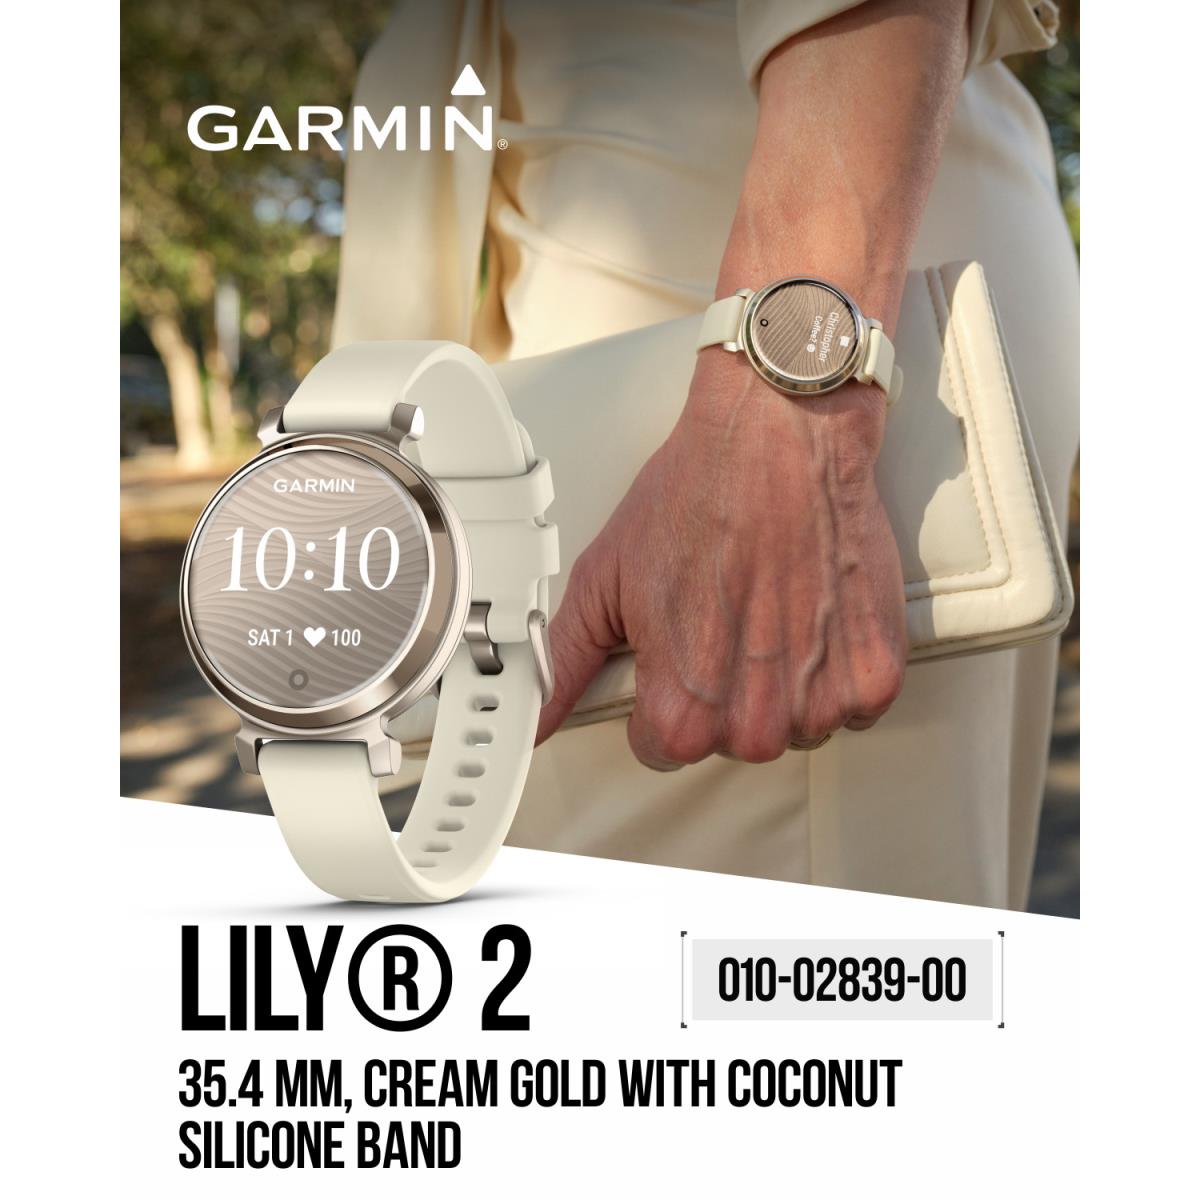 Garmin Lily 2 Women Small Stylish Smartwatch Fitness Cream Gold